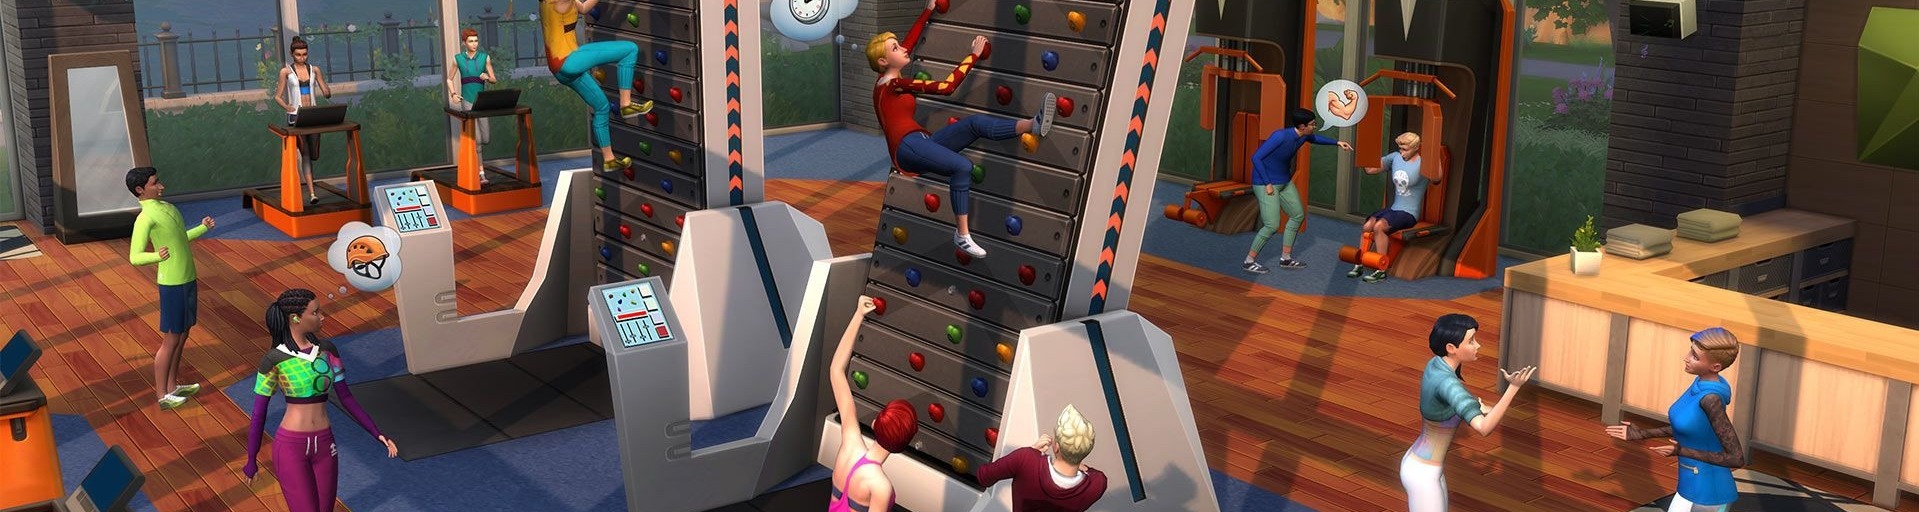 The Sims 4: Fitness Stuff Origin CD Key bg